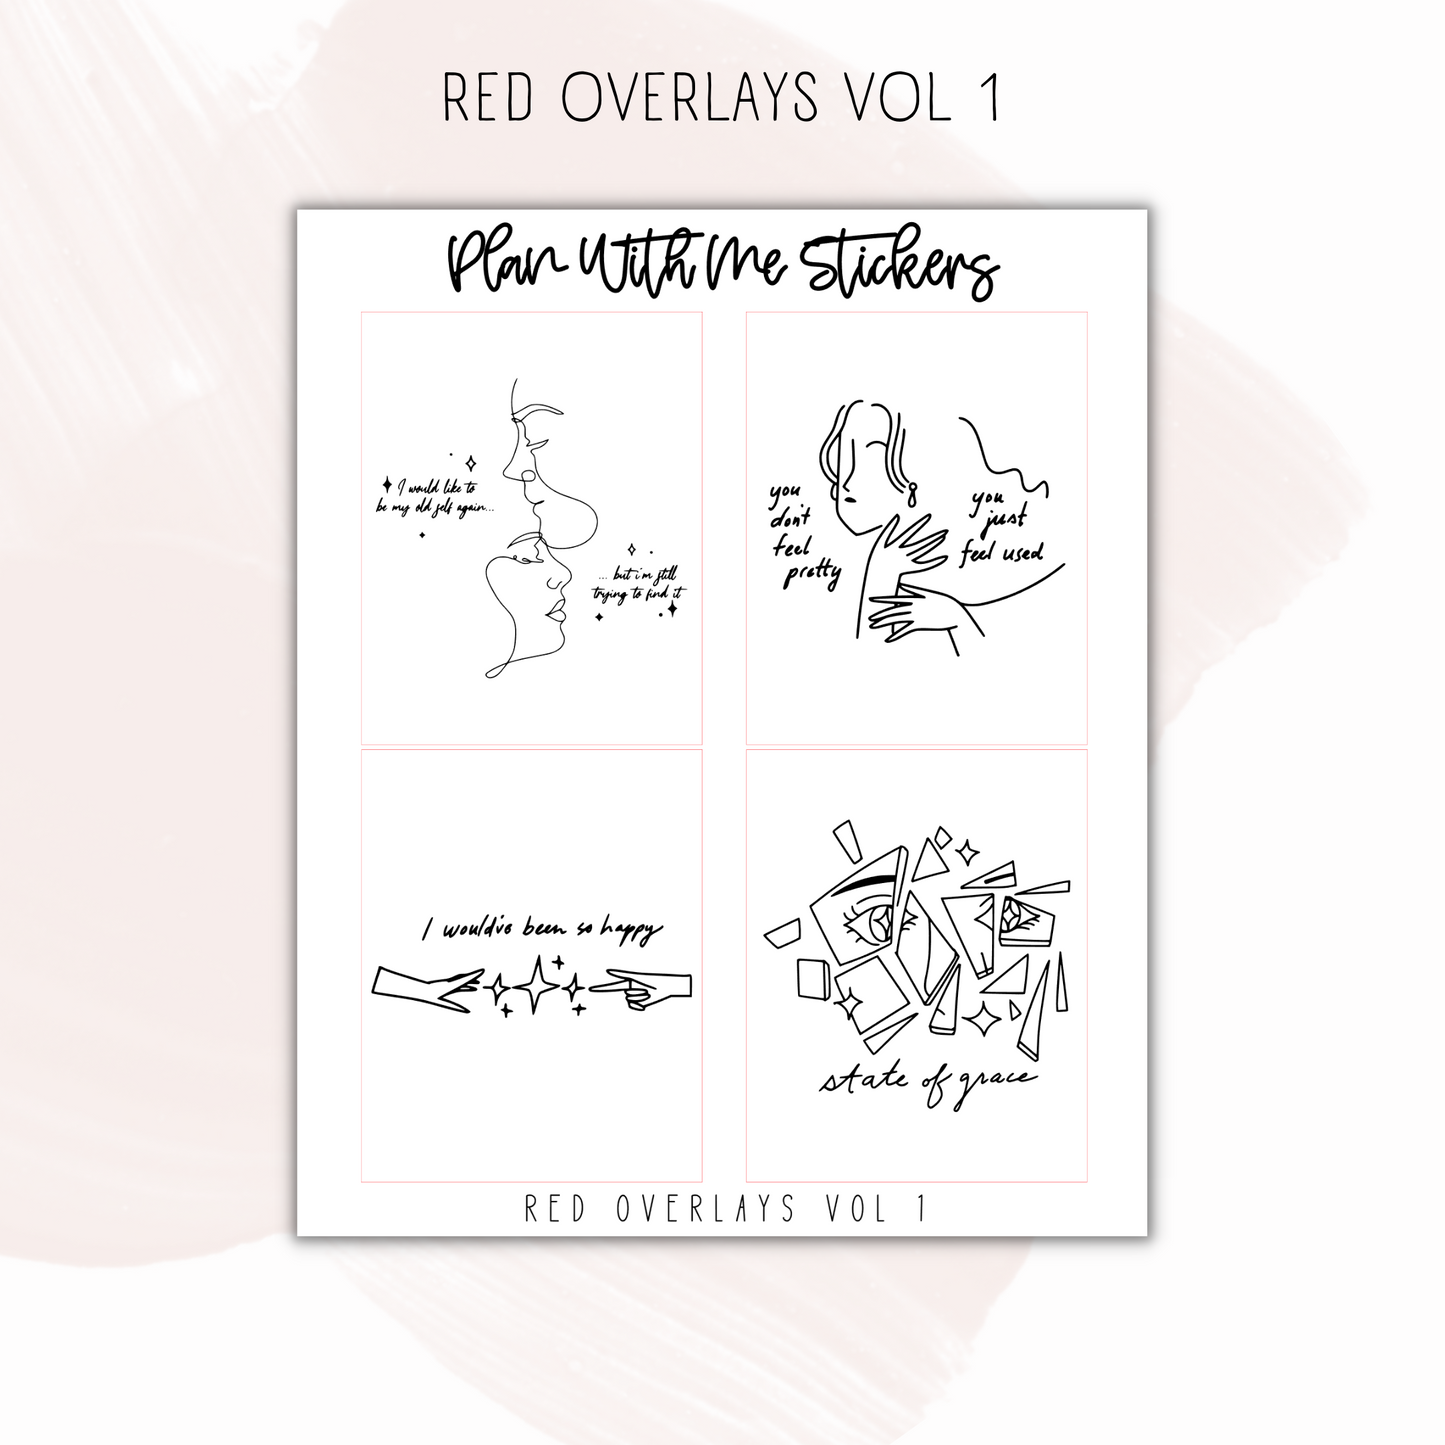 Red Overlays Vol 1